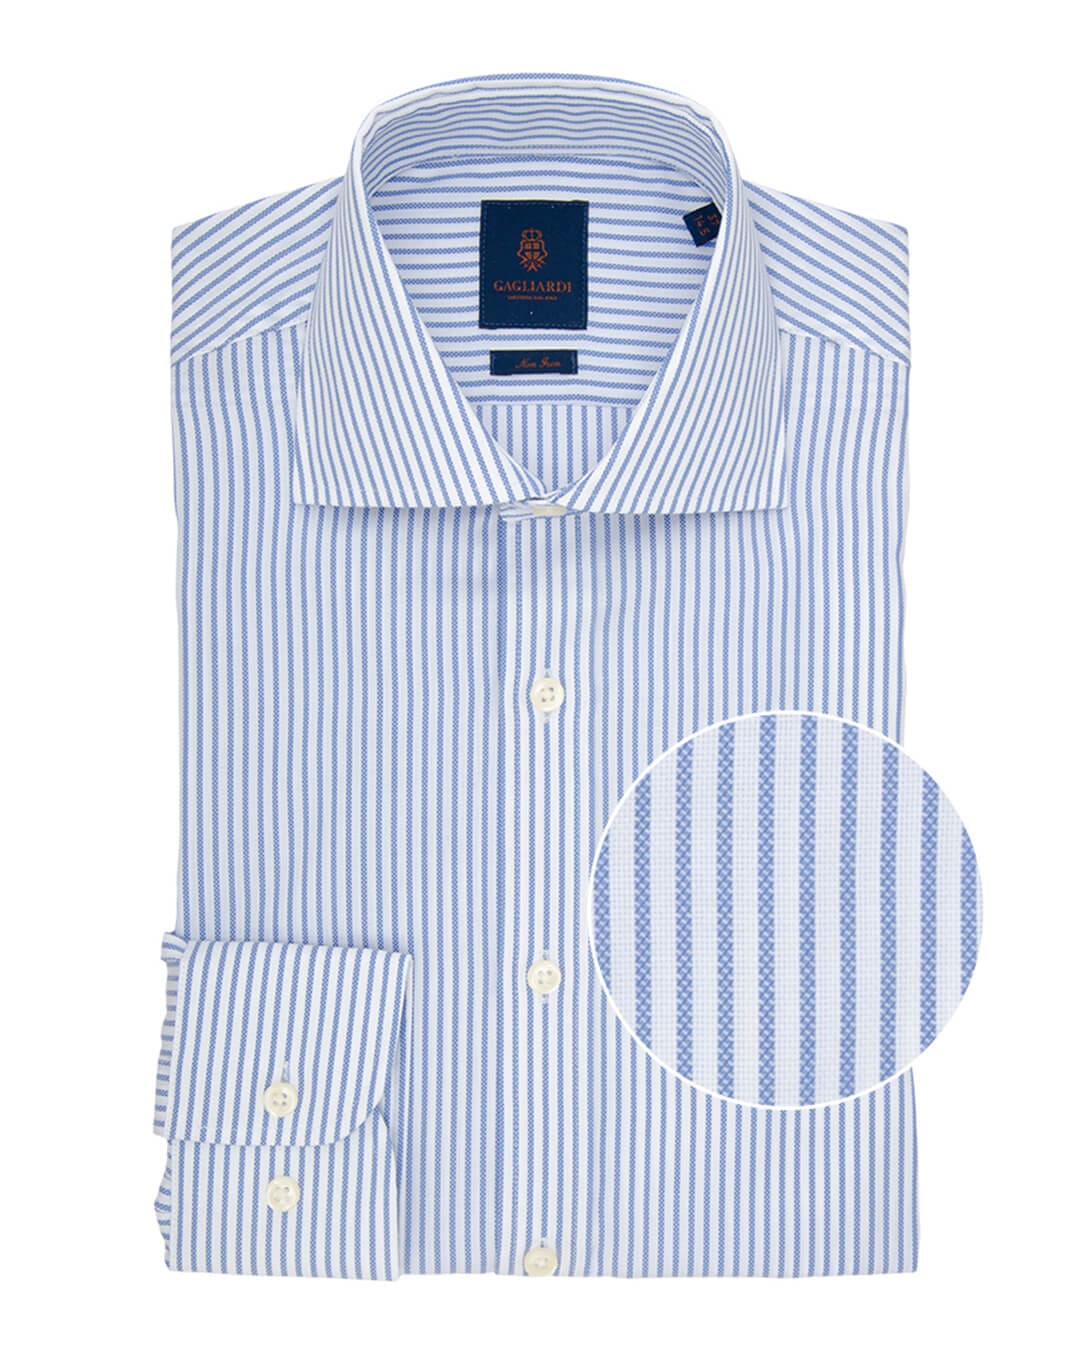 Gagliardi Shirts Gagliardi Slim Fit Blue Bengal Striped Non Iron Oxford Cotton Shirt